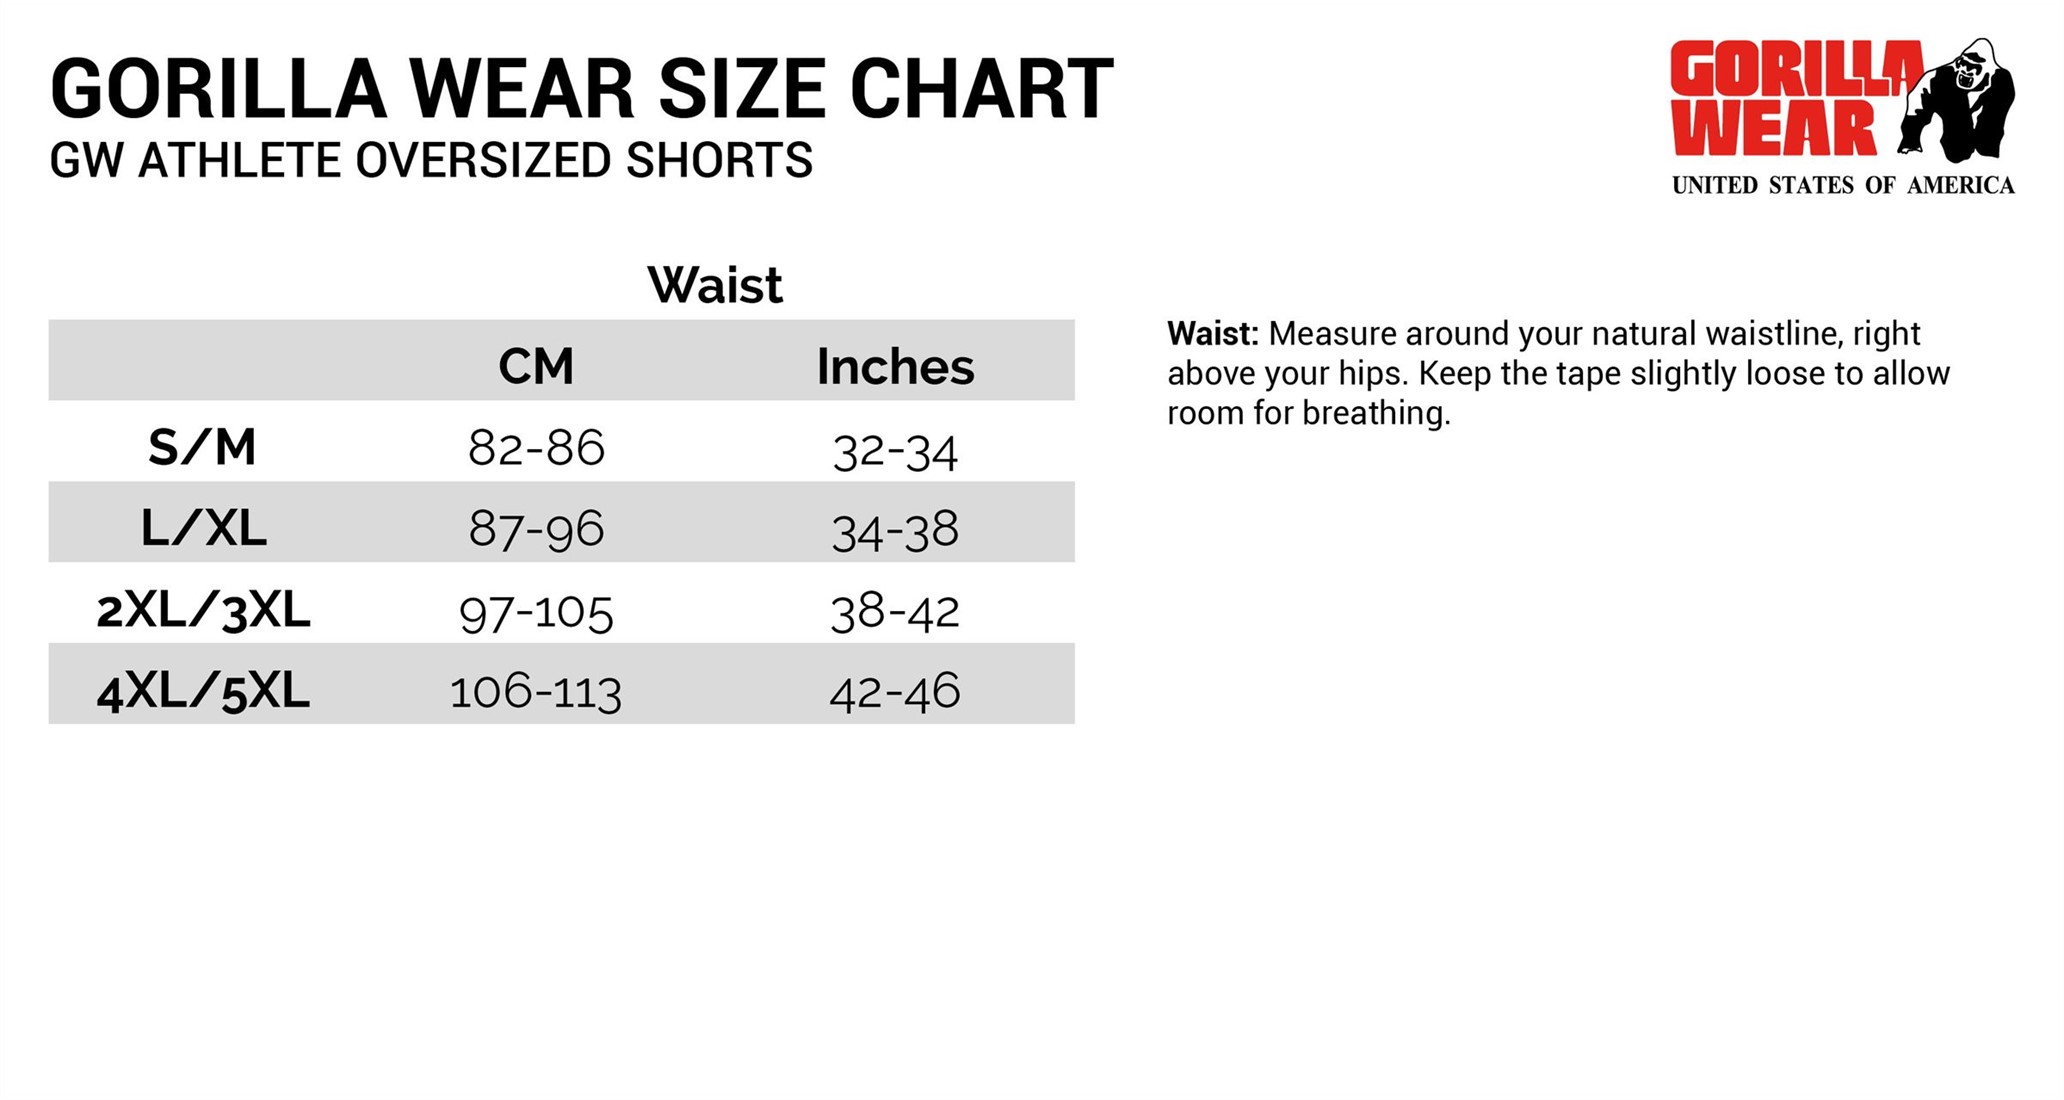 Xl Dress Size Chart